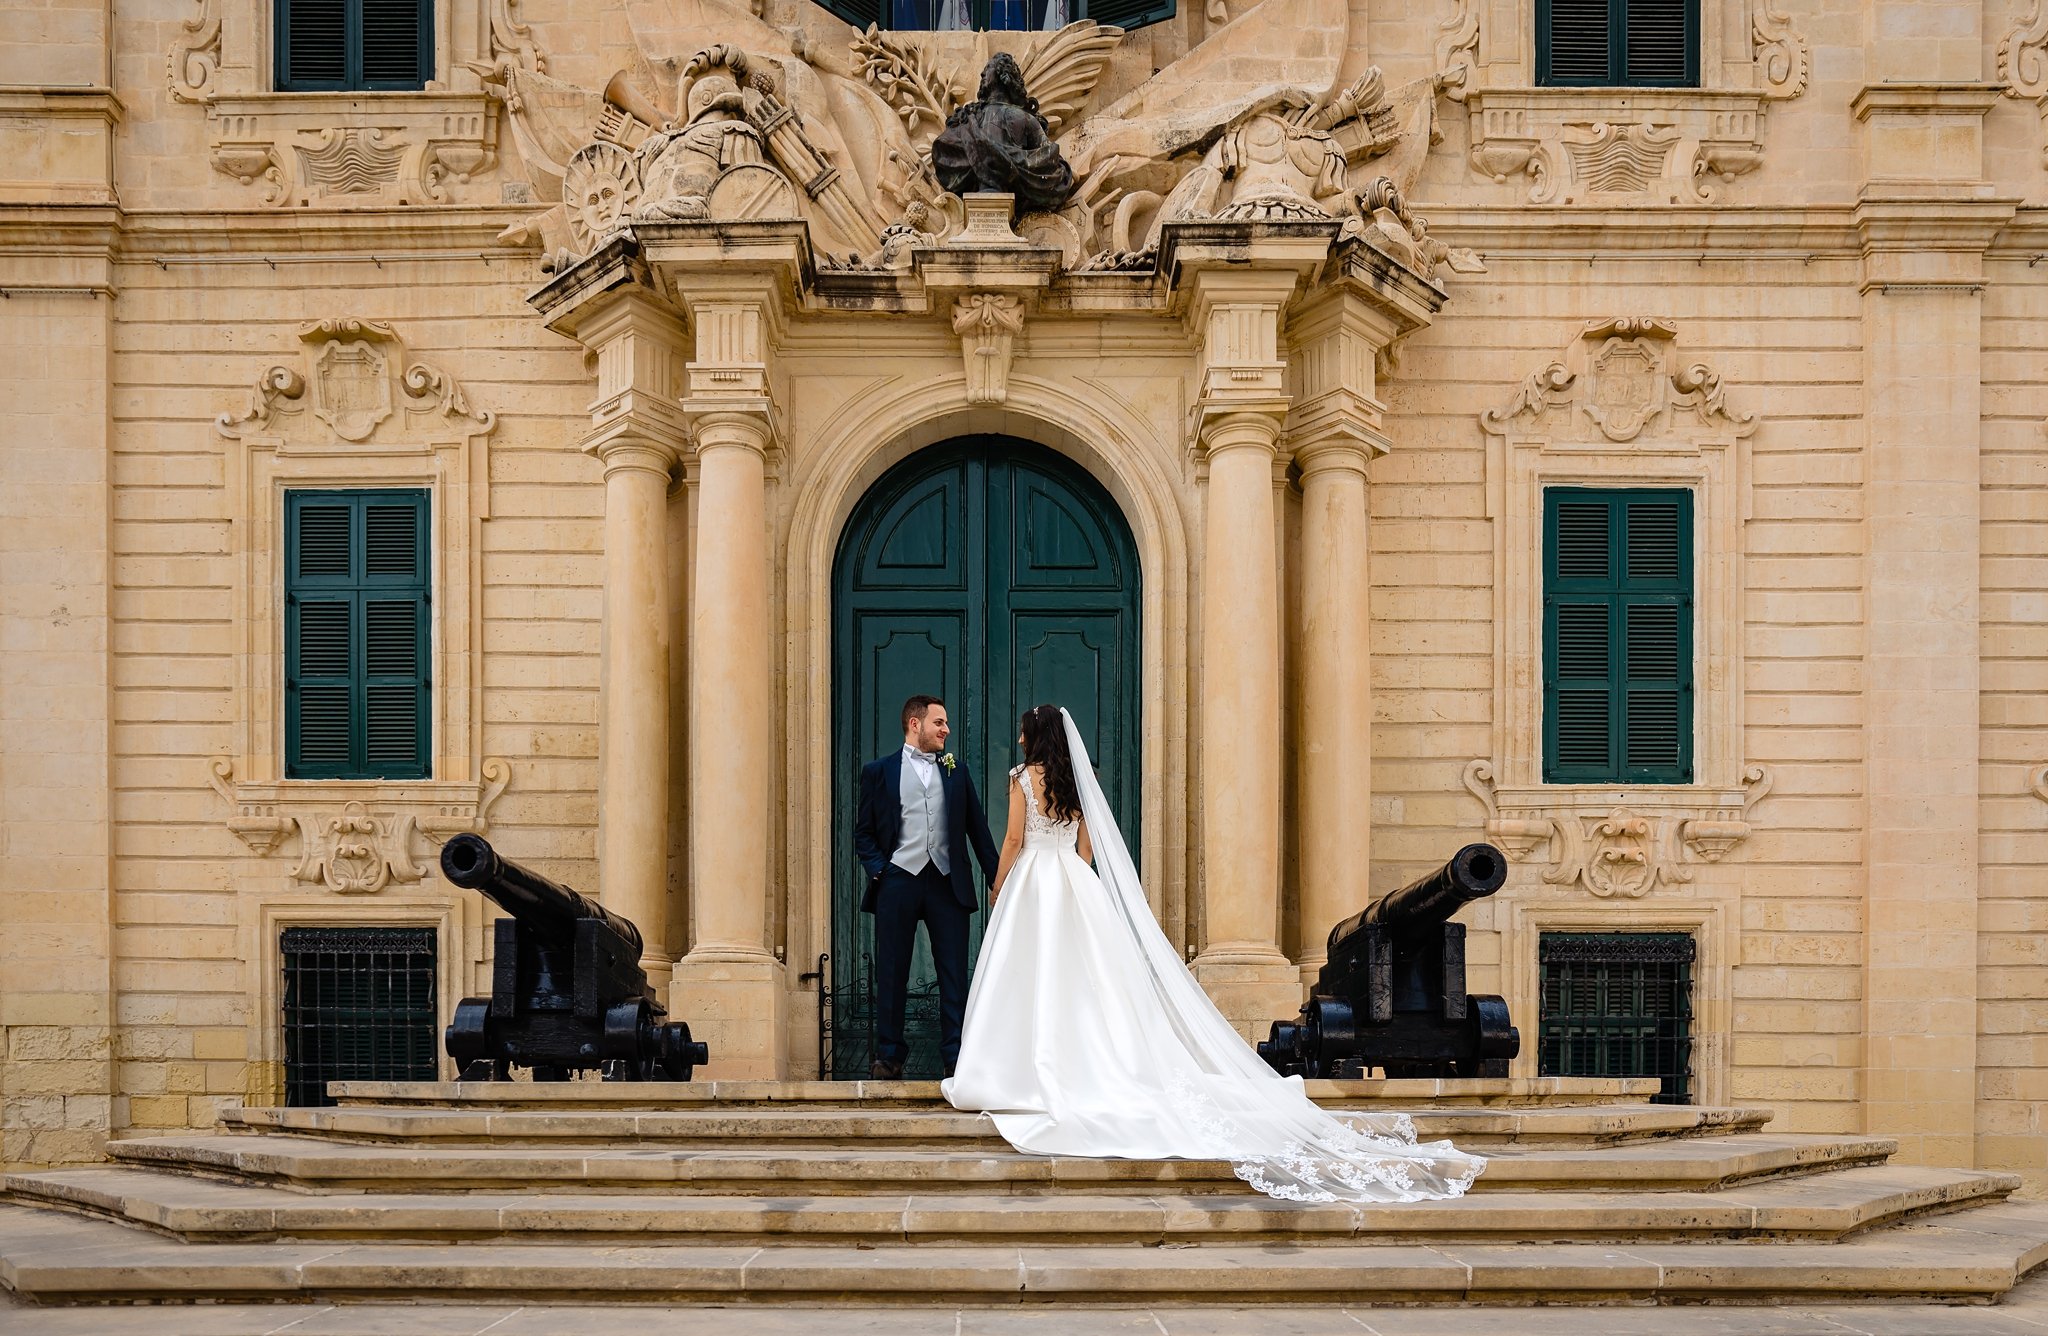 Desiree and Andrei's Wedding at Villa Mdina Naxxar_0041.jpg